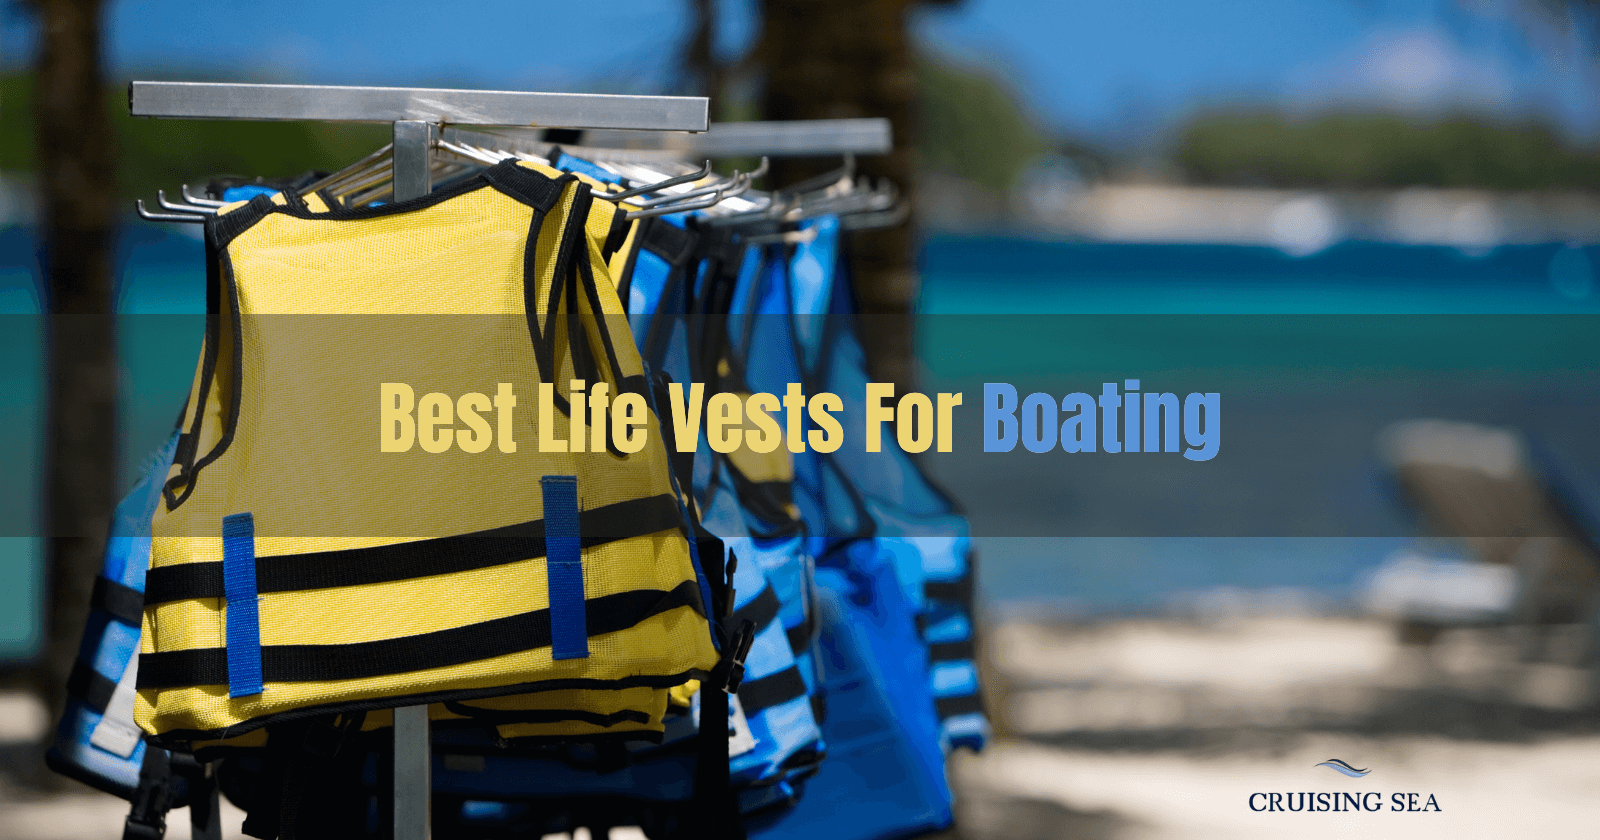 3 Highest Rated Life Vests for Boating